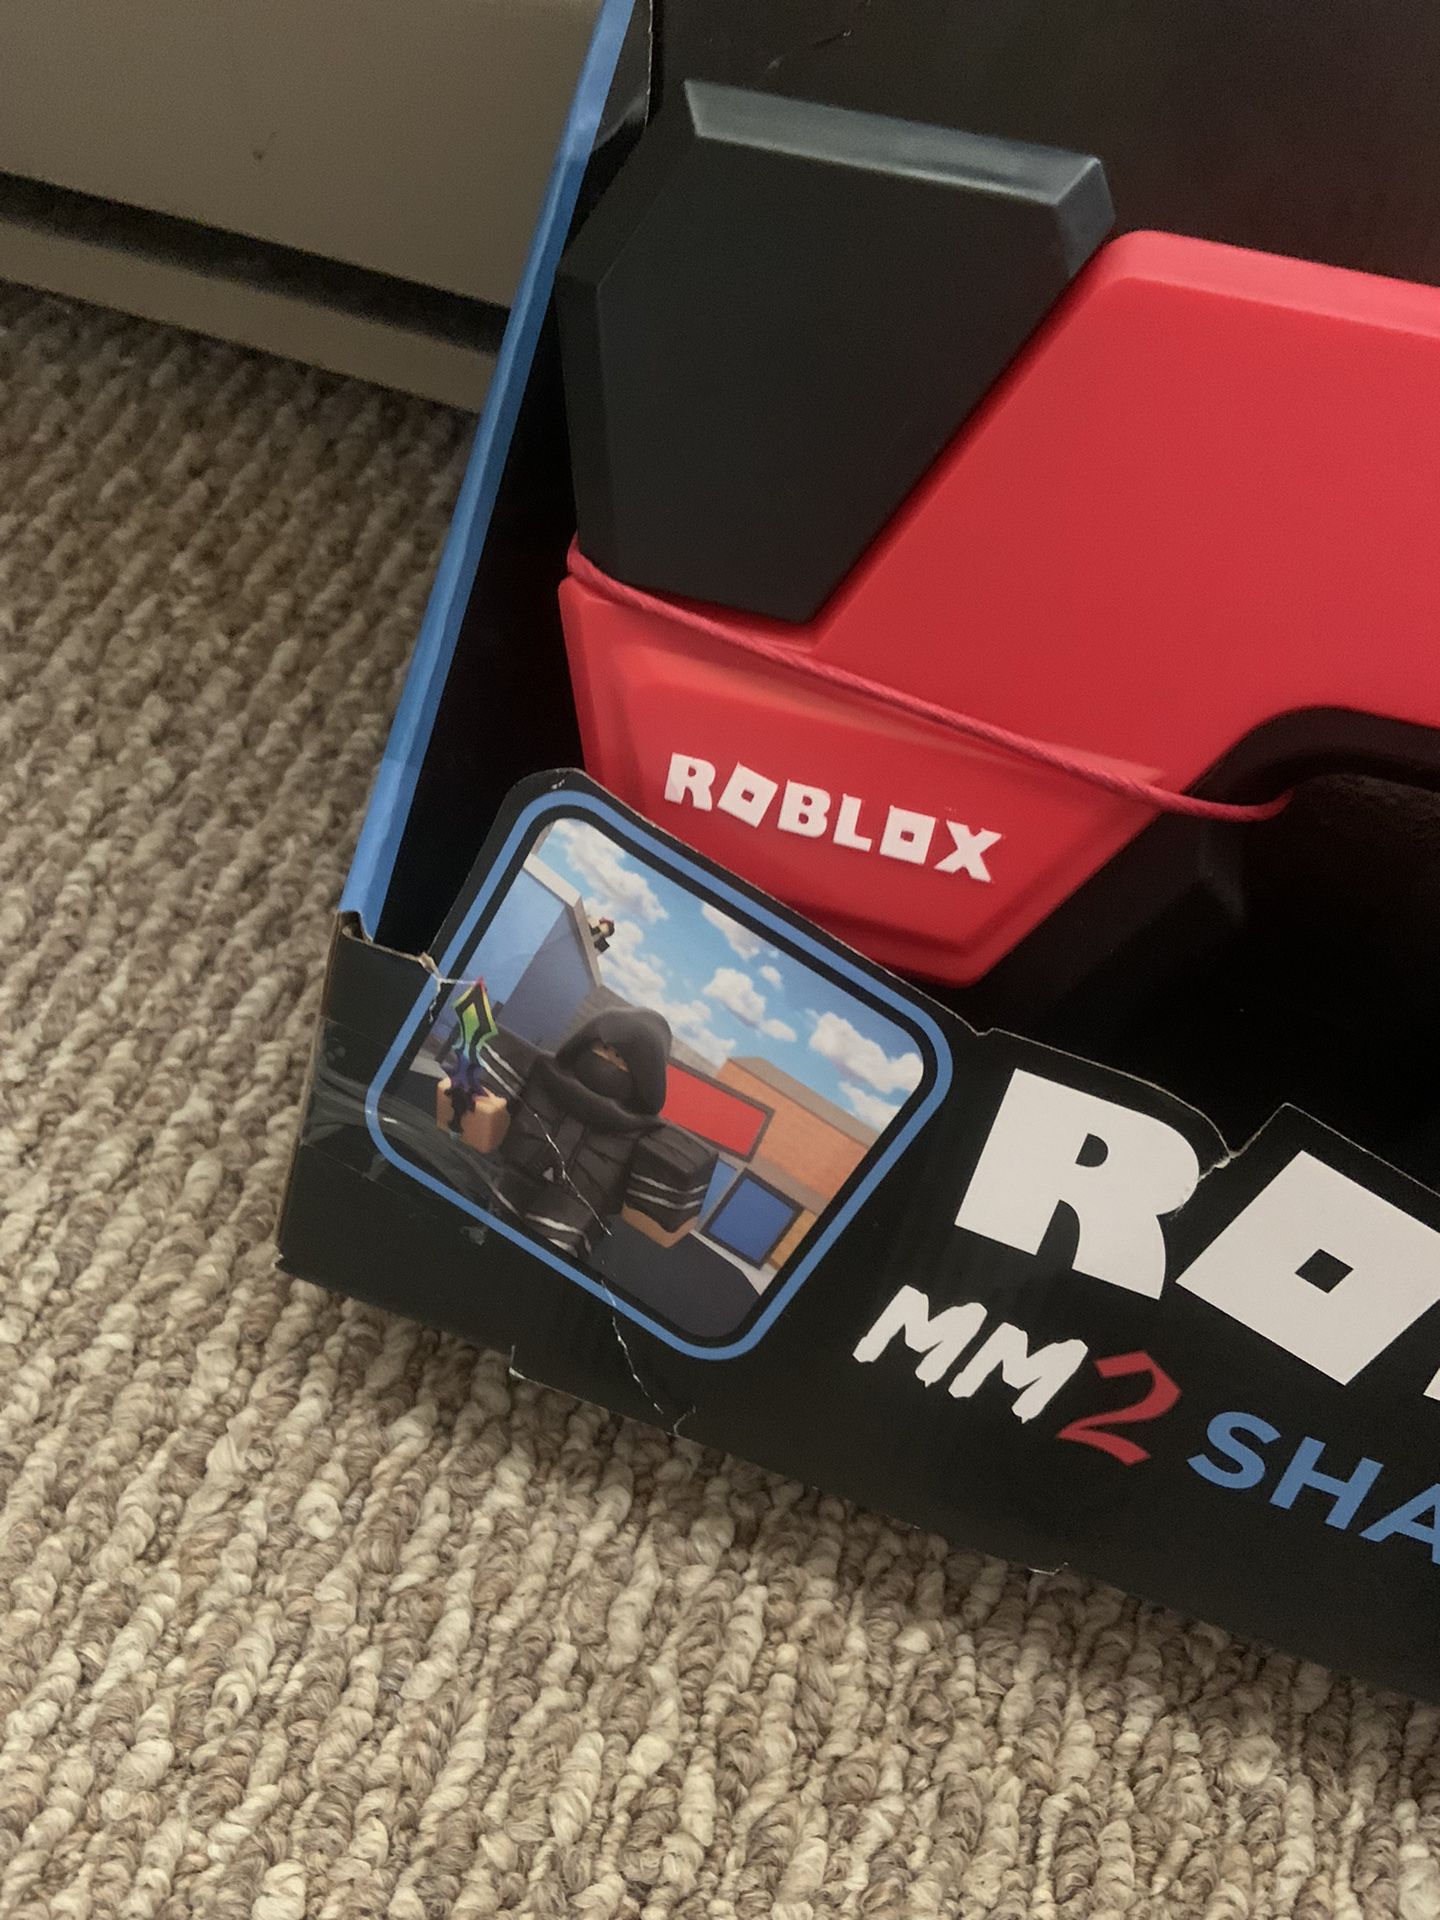 MM2 Roblox Shark Seeker Nerf gun, Hobbies & Toys, Toys & Games on Carousell